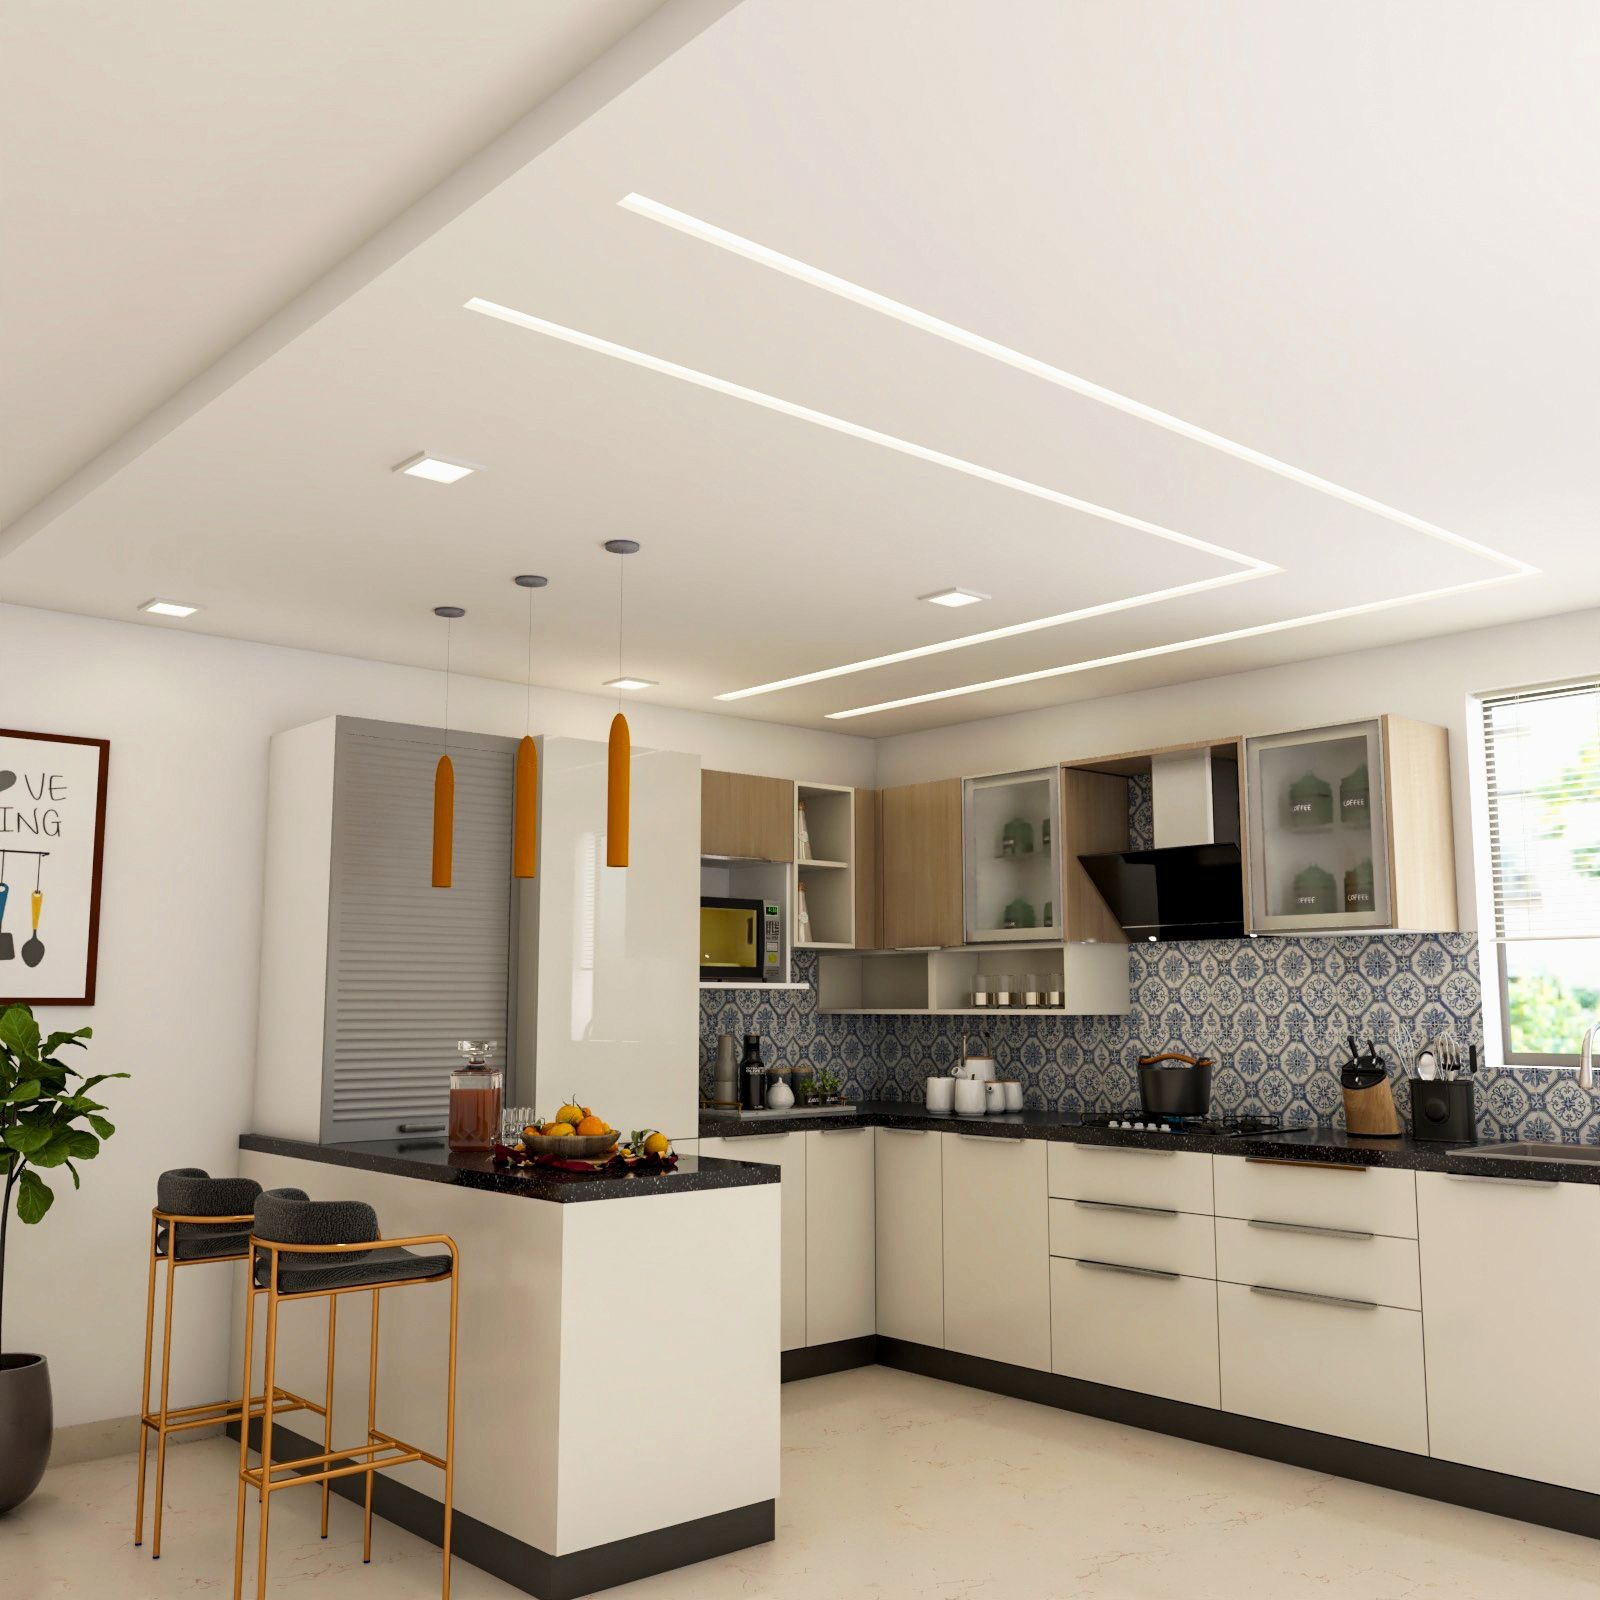 Geometric Gypsum Rectangular Ceiling Design For The Kitchen